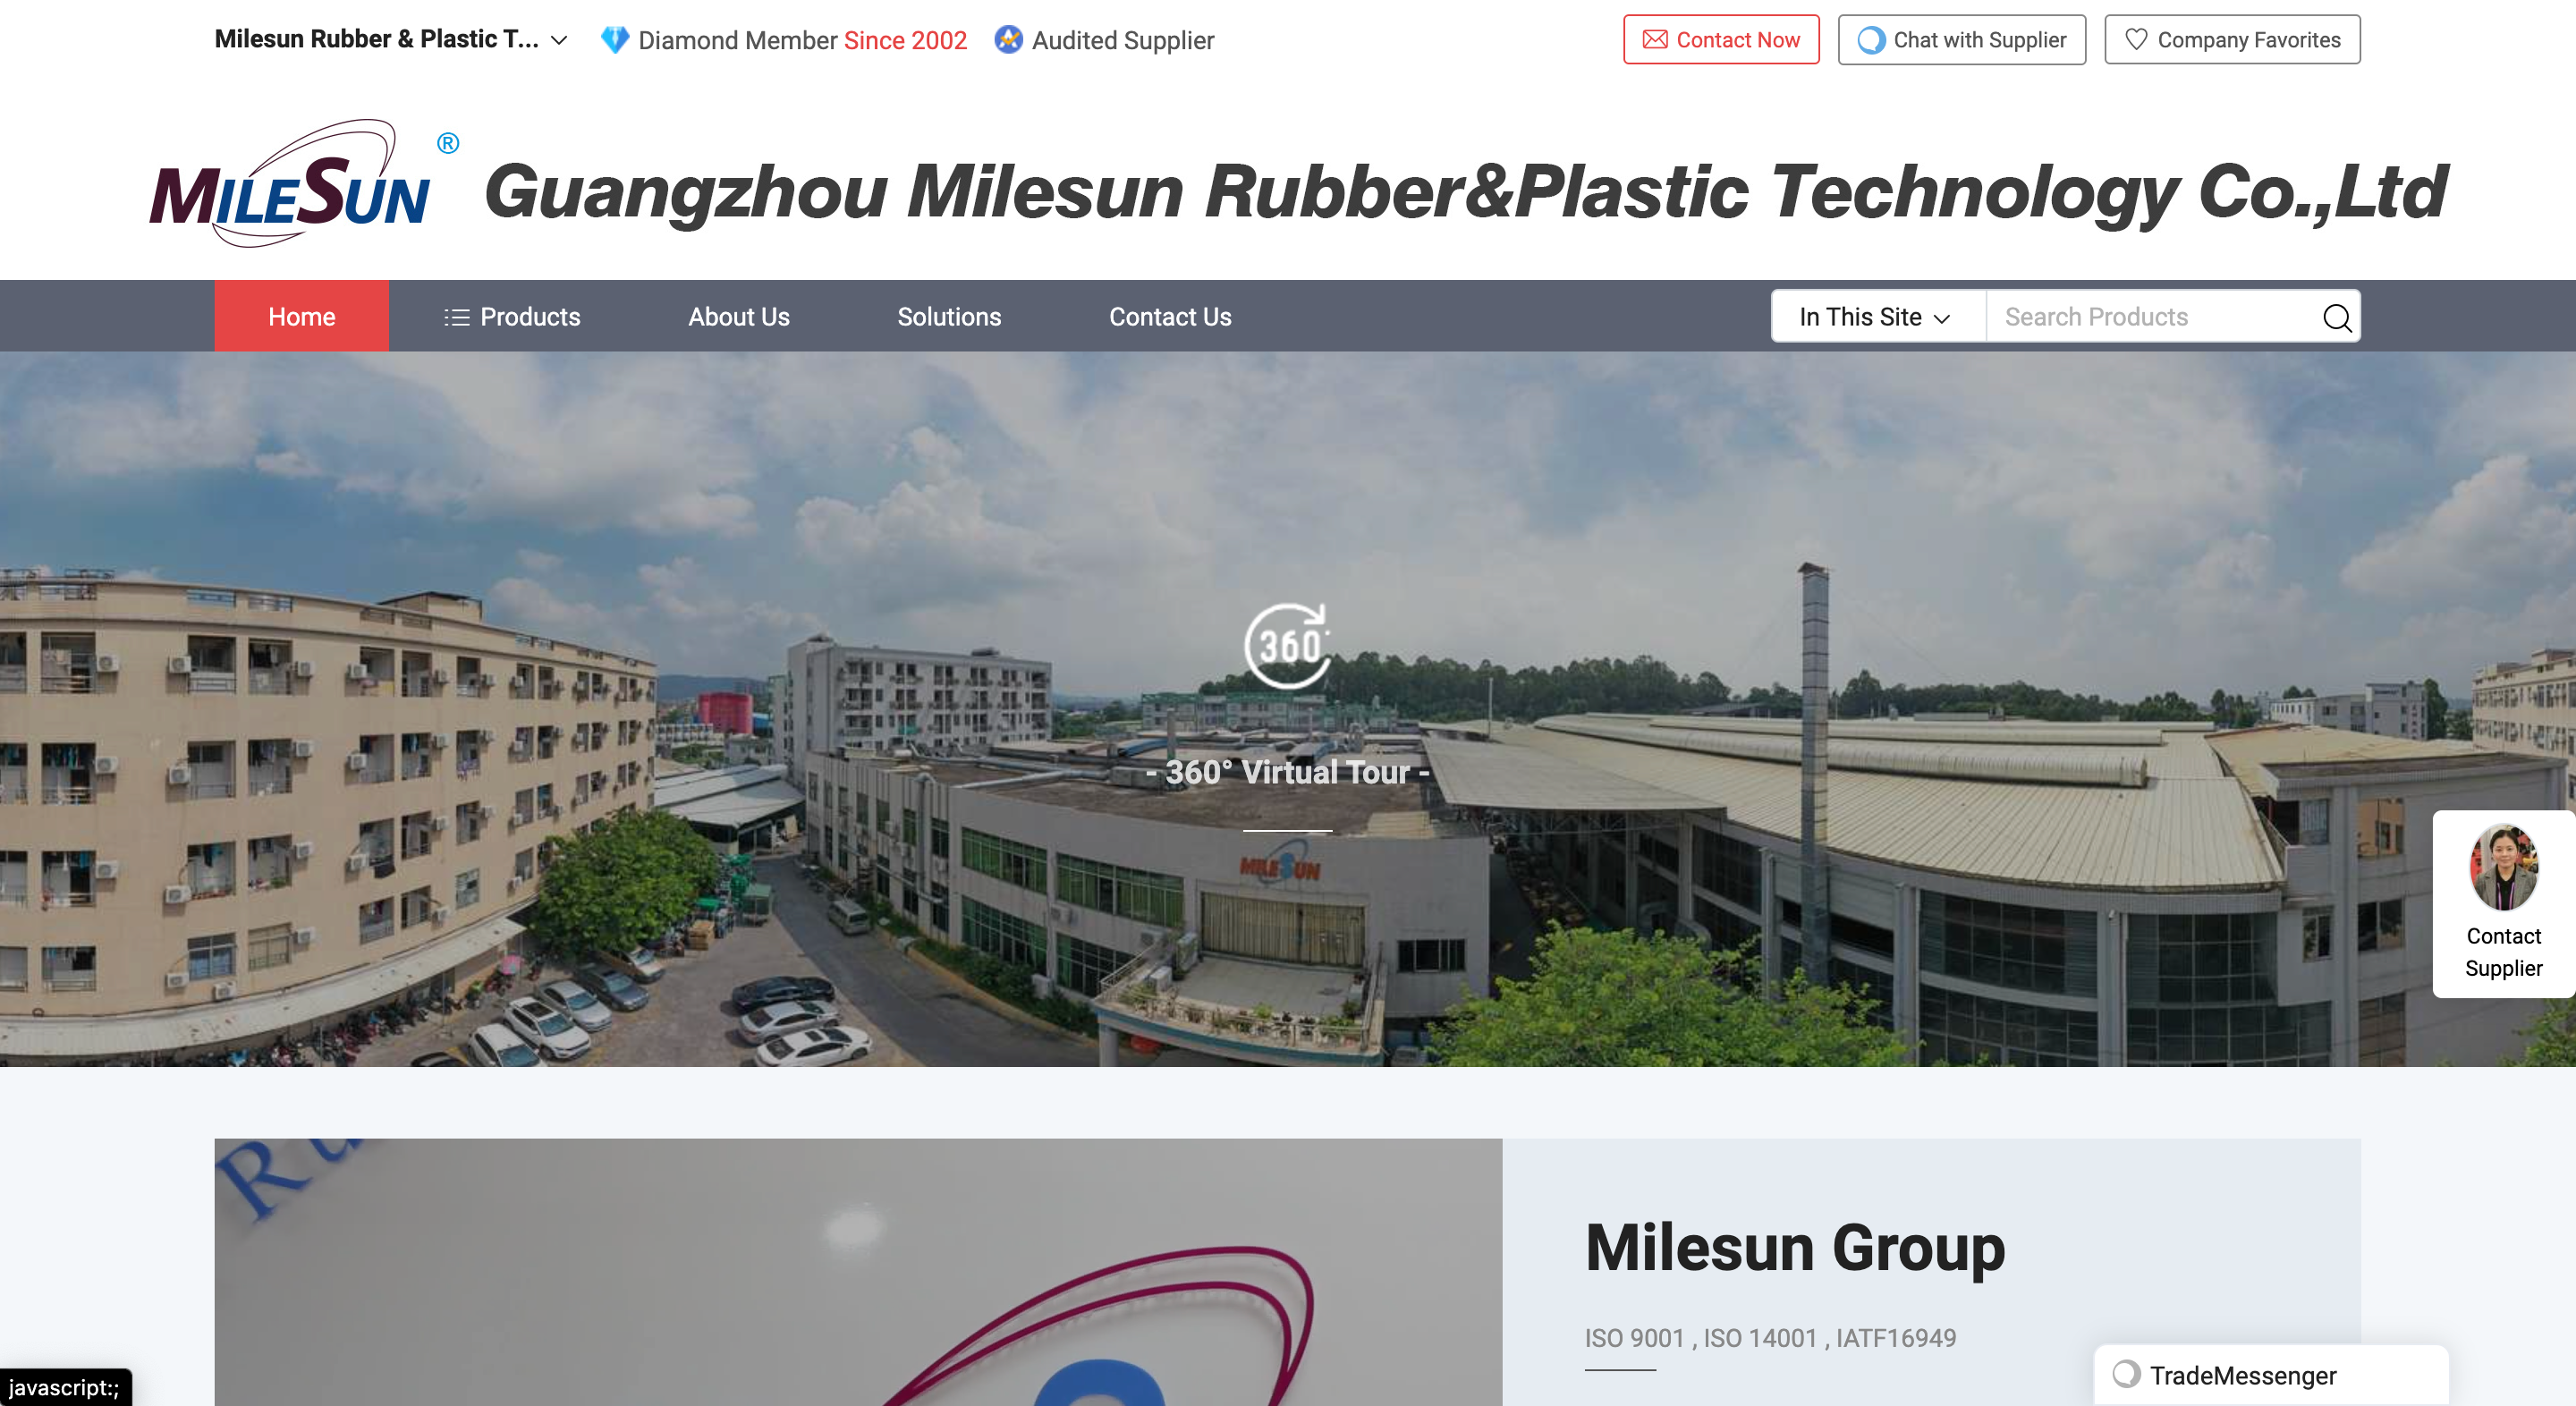 Milesun Rubber & Plastic Technology Co., Ltd.